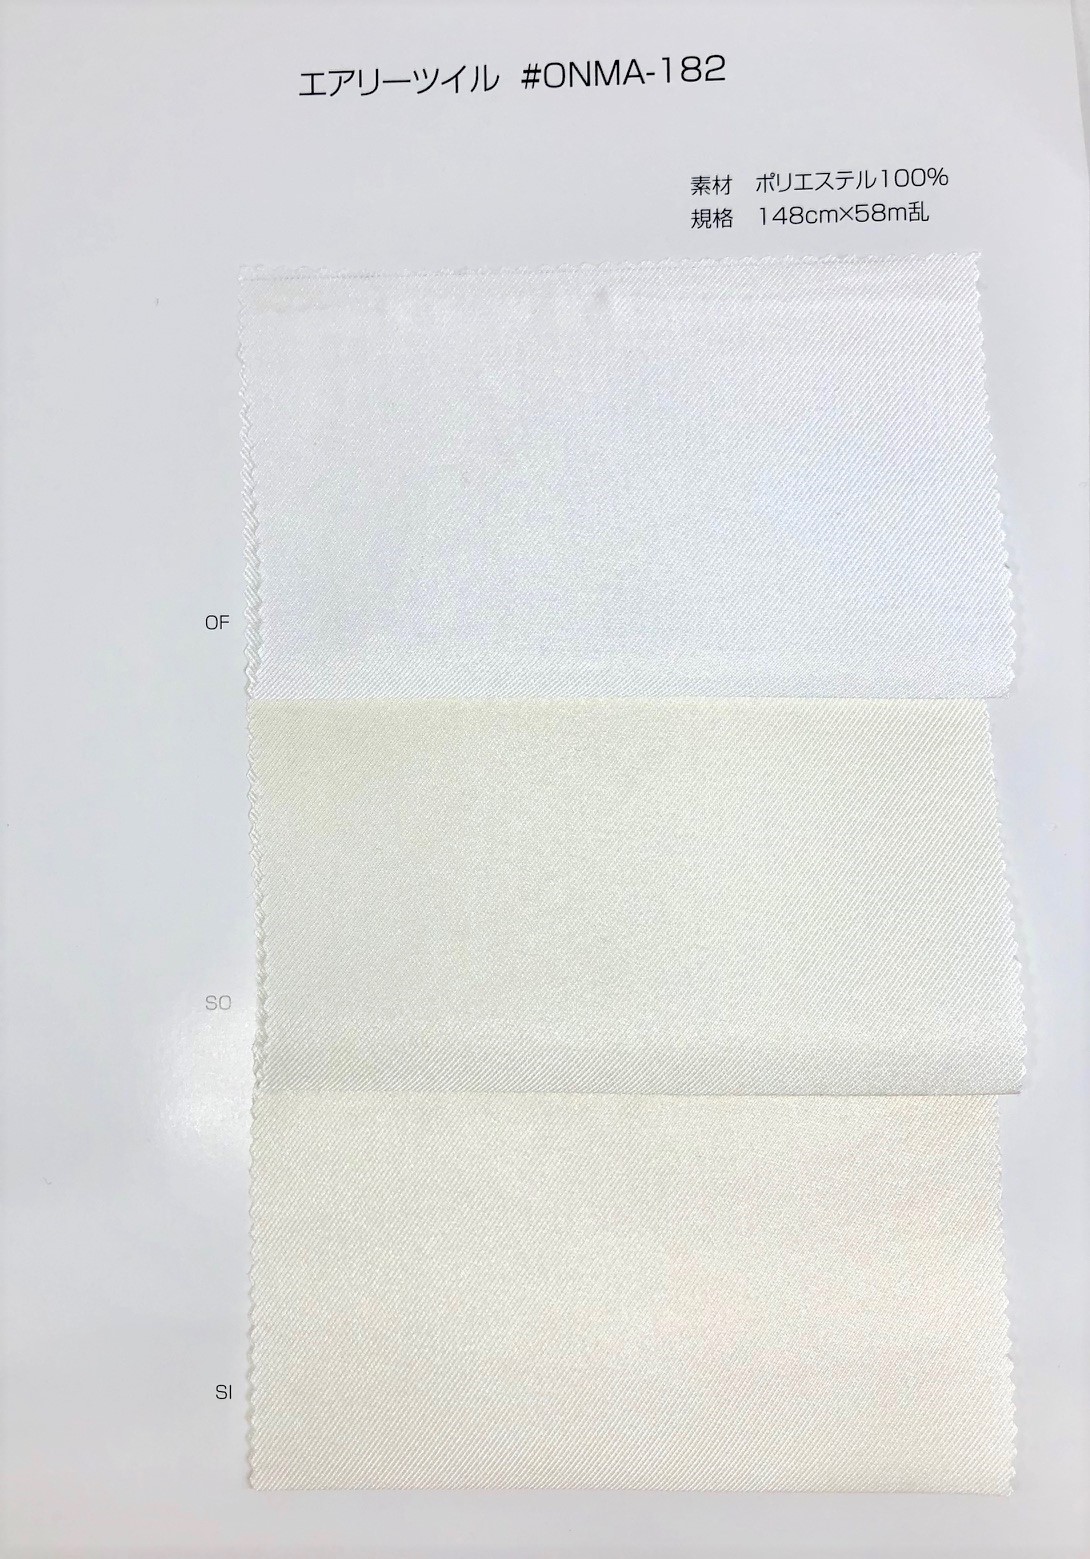 ONMA-182 Luftiger Köper[Textilgewebe] Suncorona Oda